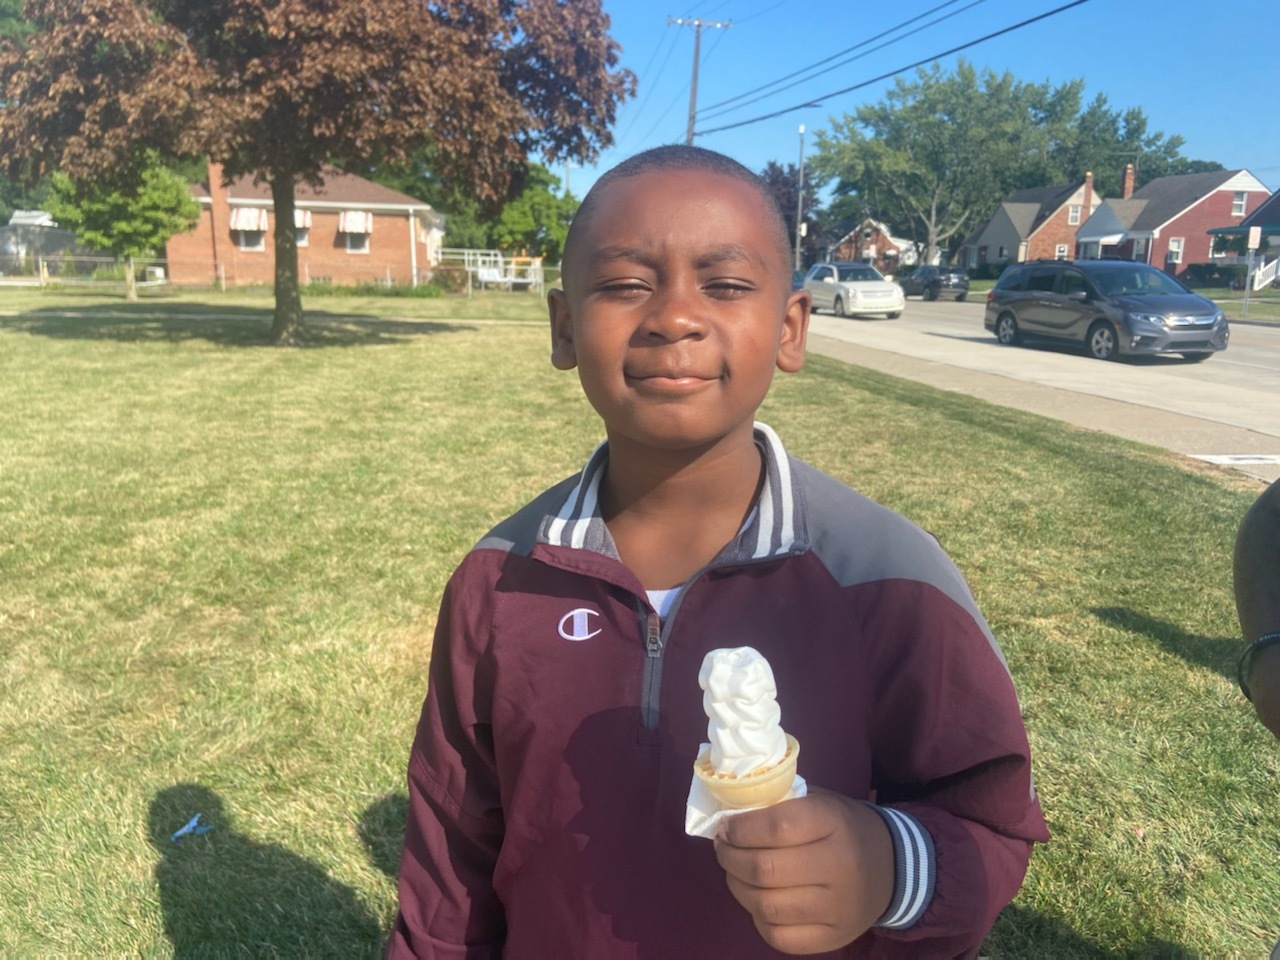 Pleasantview student smiles while holding ice cream cone